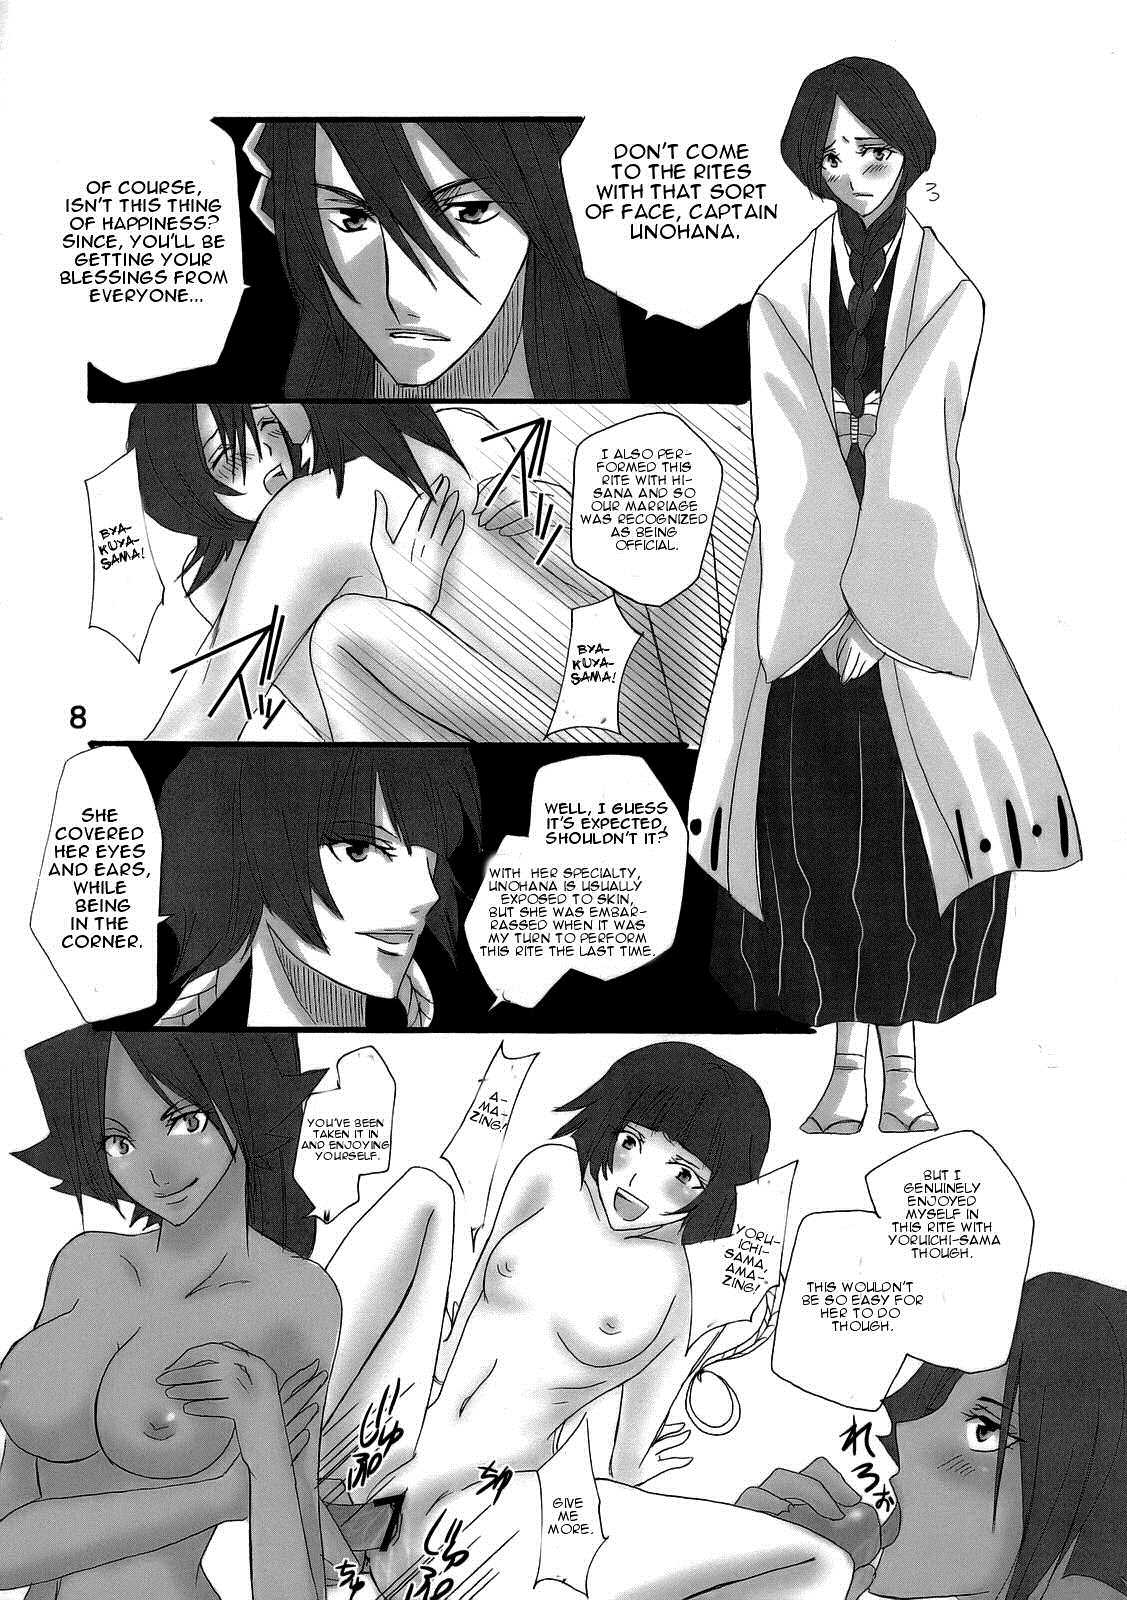 Page 7 | Bankai ~ Unohana Kuzushi ~ - Bleach Hentai Doujinshi by Maxi -  Pururin, Free Online Hentai Manga and Doujinshi Reader